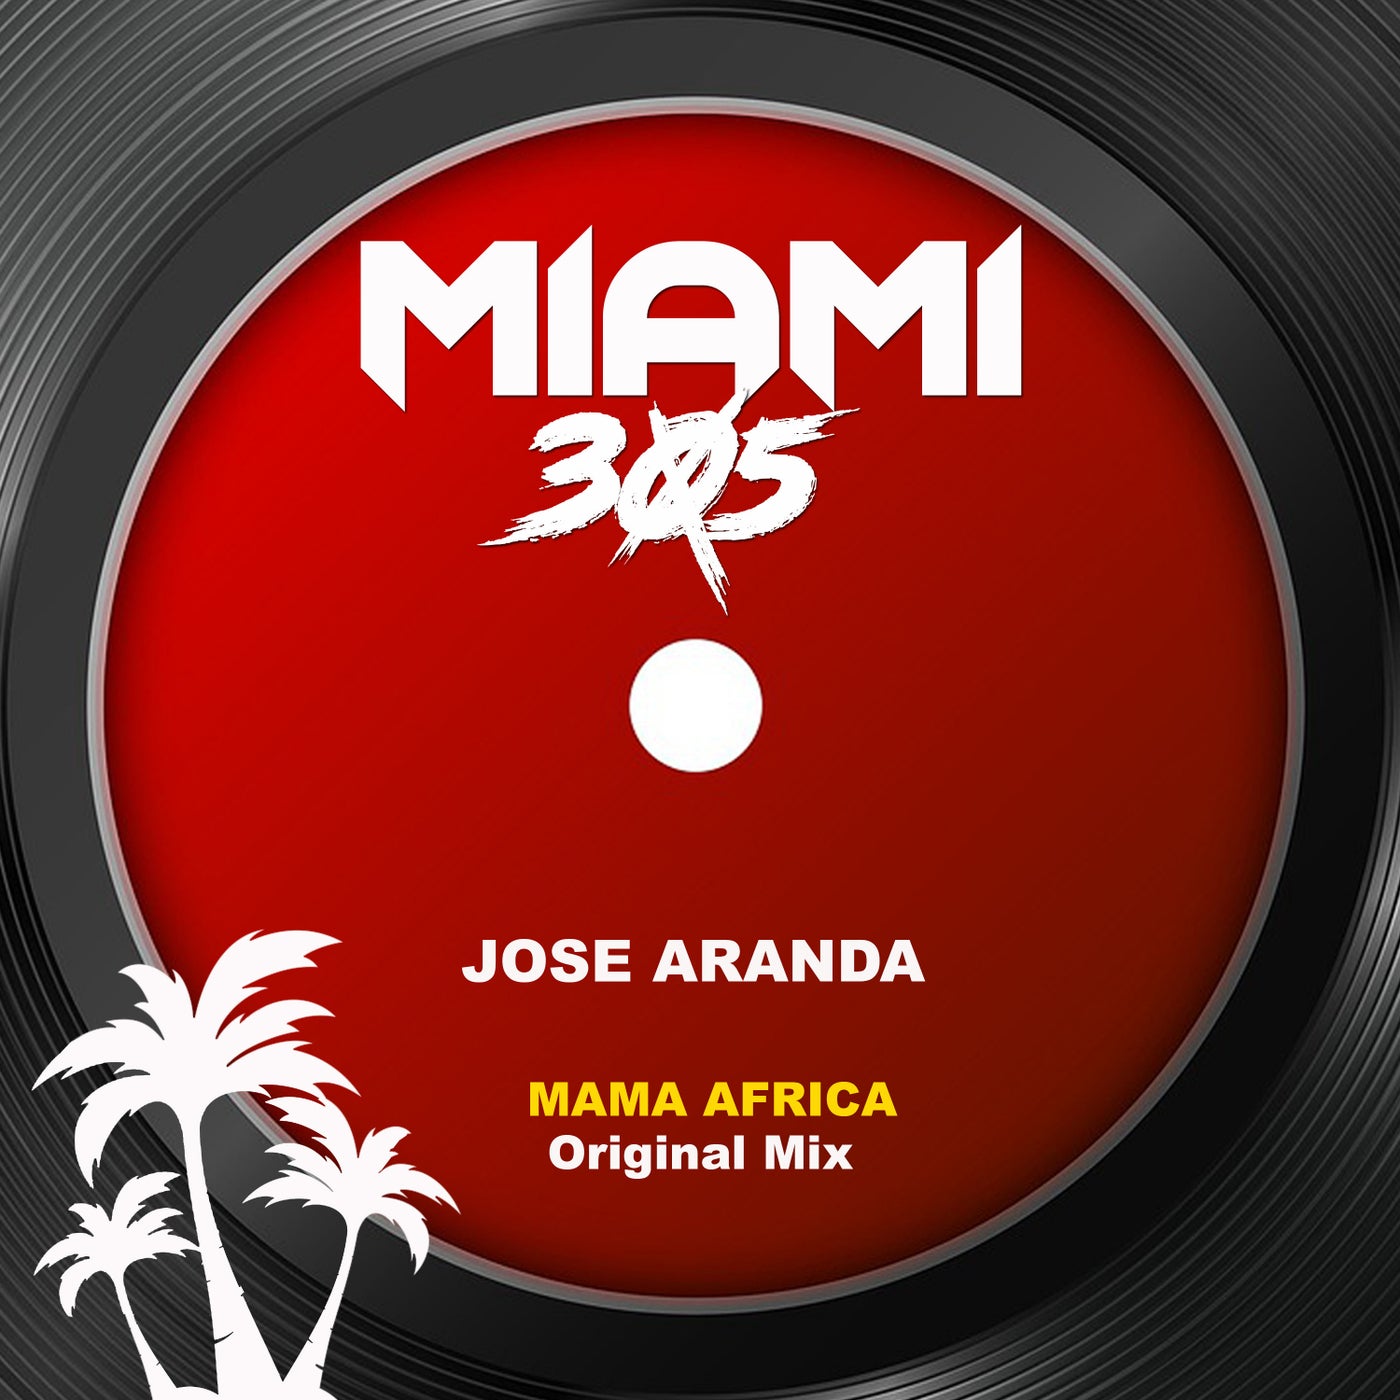 José Aranda - Mama Africa [Miami 305]